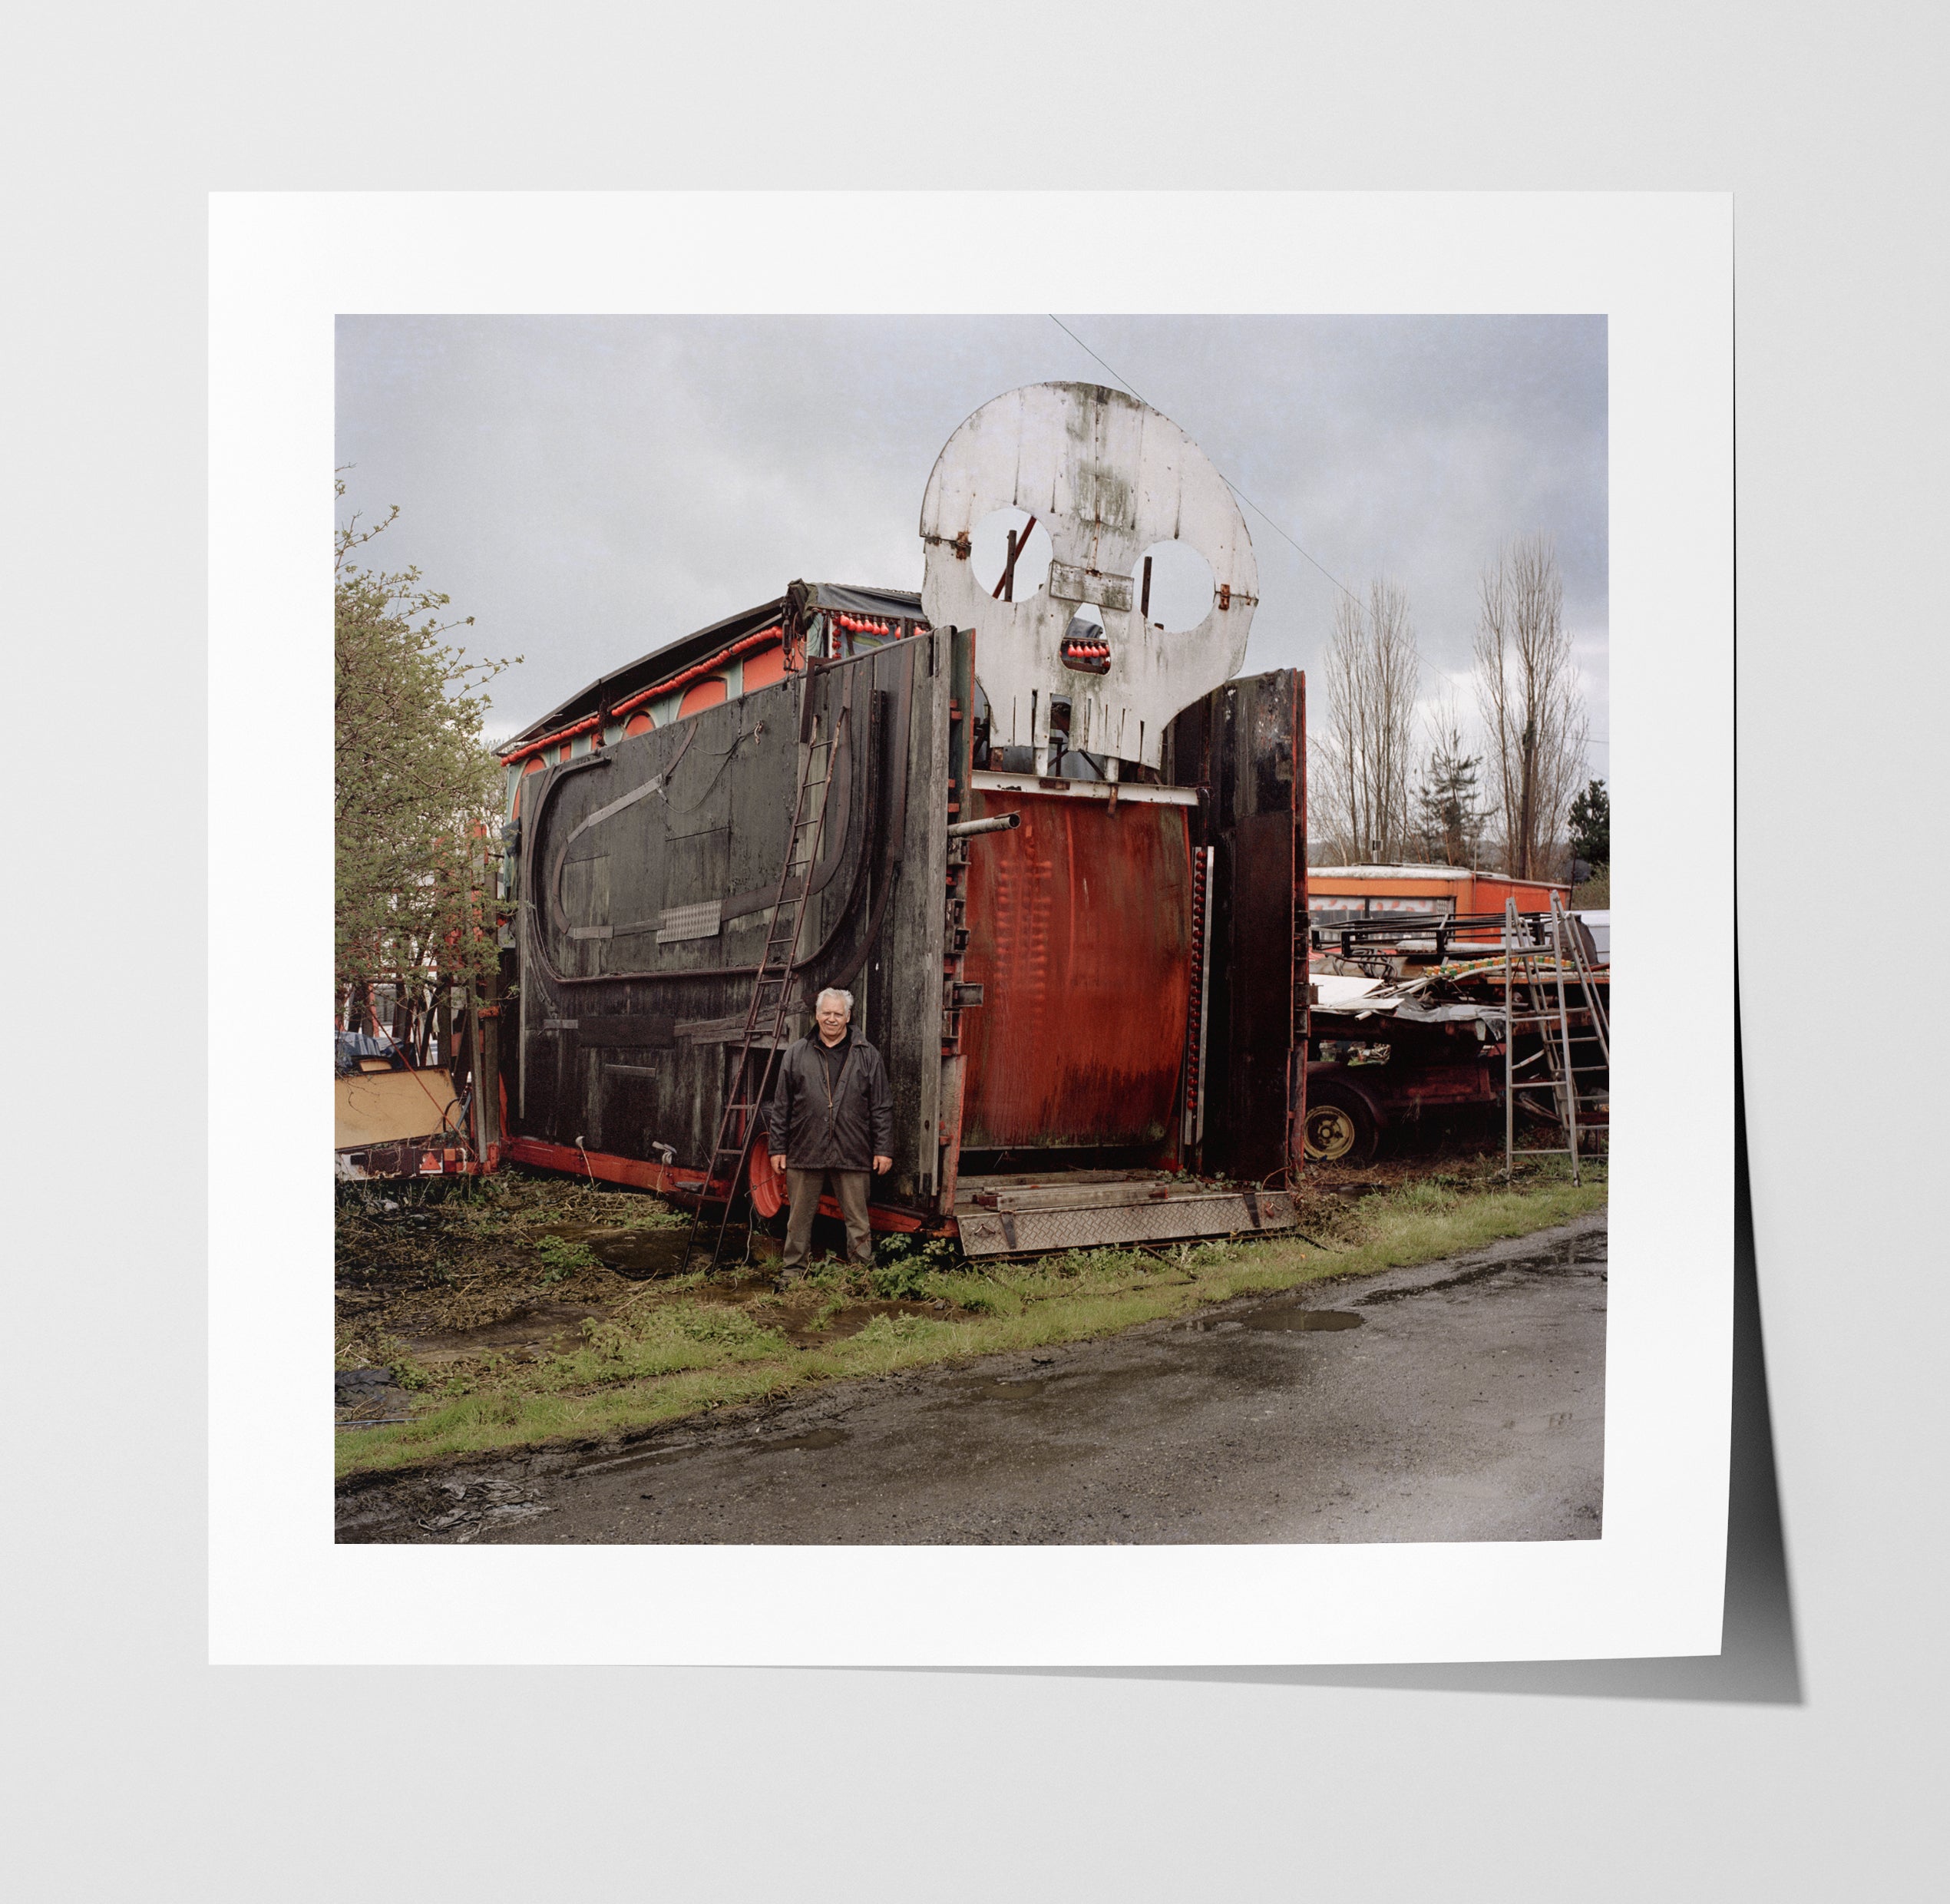 Francis Gavan, Ghost Train Ride, Pottery Fields, Leeds, Spring 2006 -12x12" Pigment Print